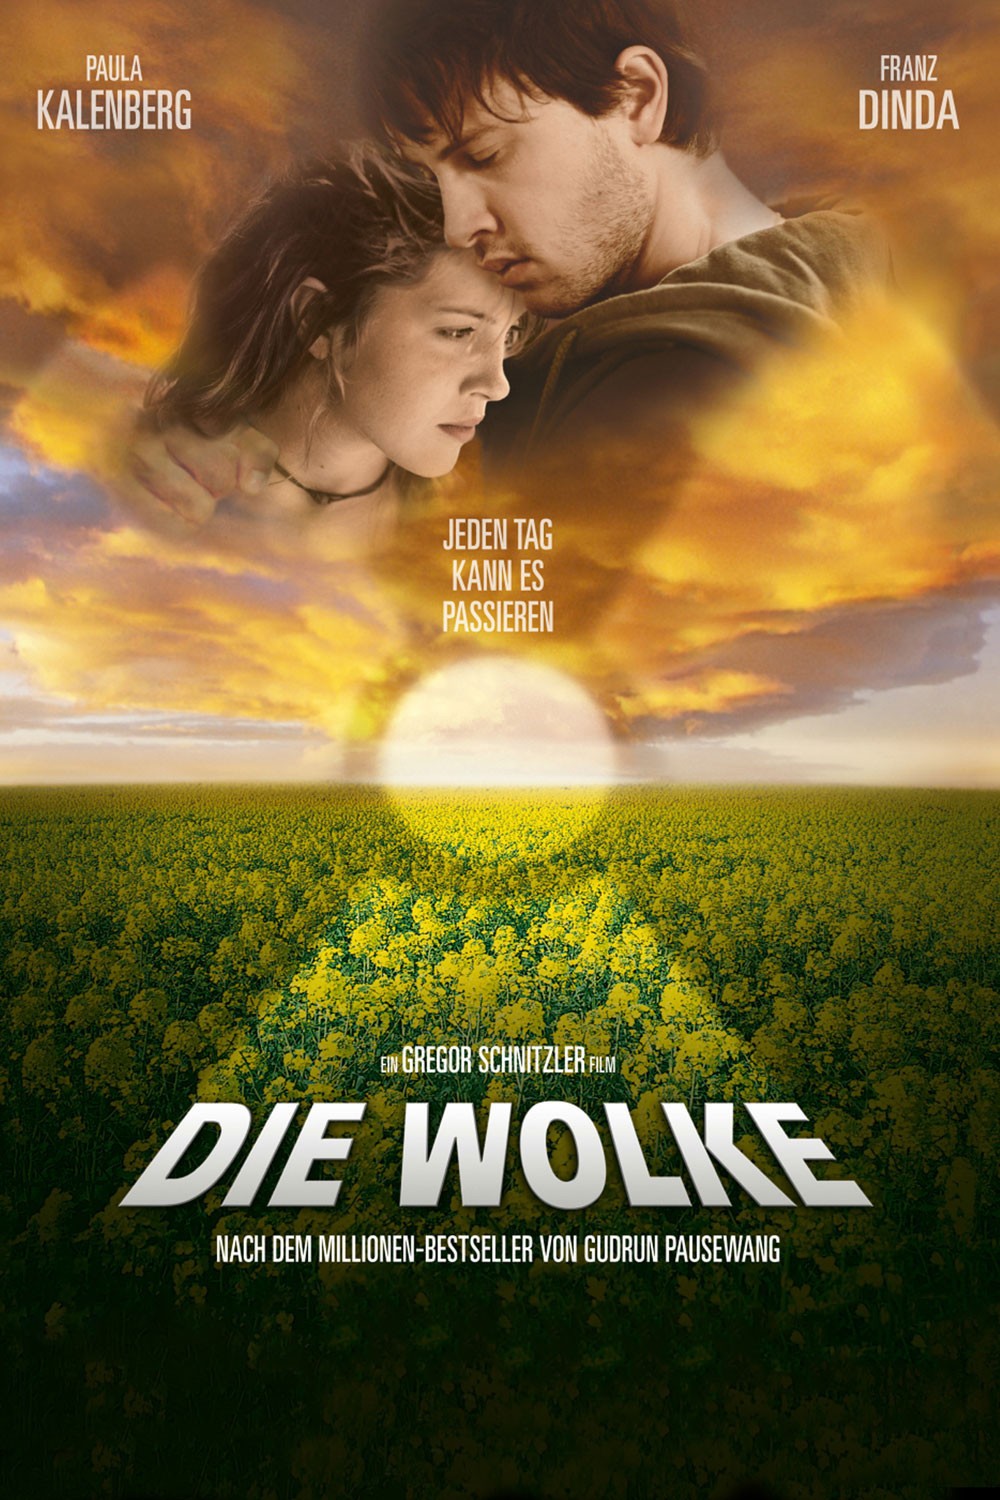 Облако / Die Wolke (2006) отзывы. Рецензии. Новости кино. Актеры фильма Облако. Отзывы о фильме Облако